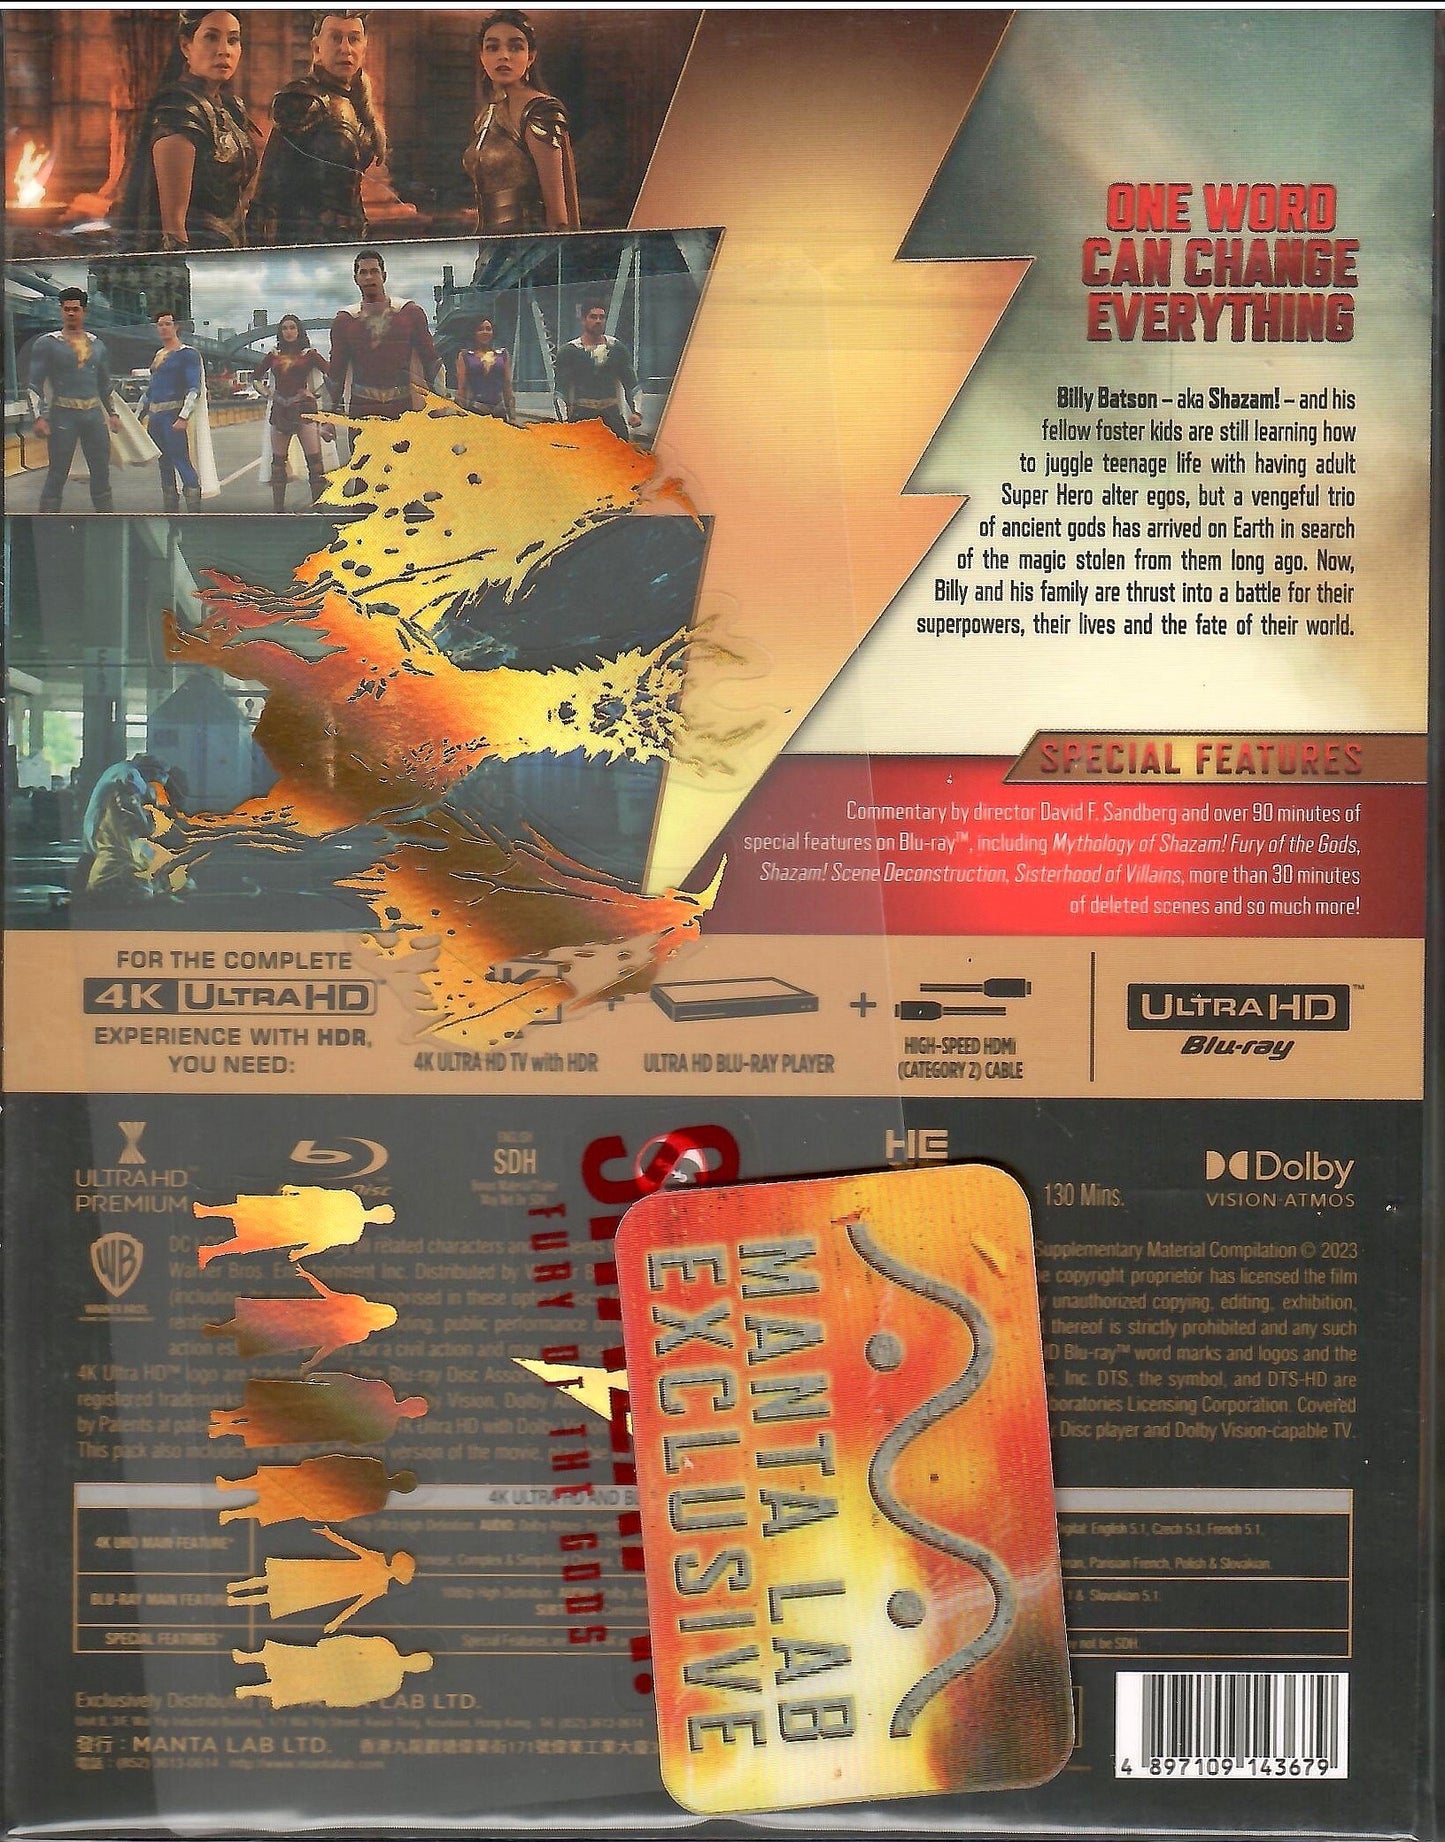 Shazam! - Fury of the Gods 4K 1-Click SteelBook (ME#58)(Hong Kong)